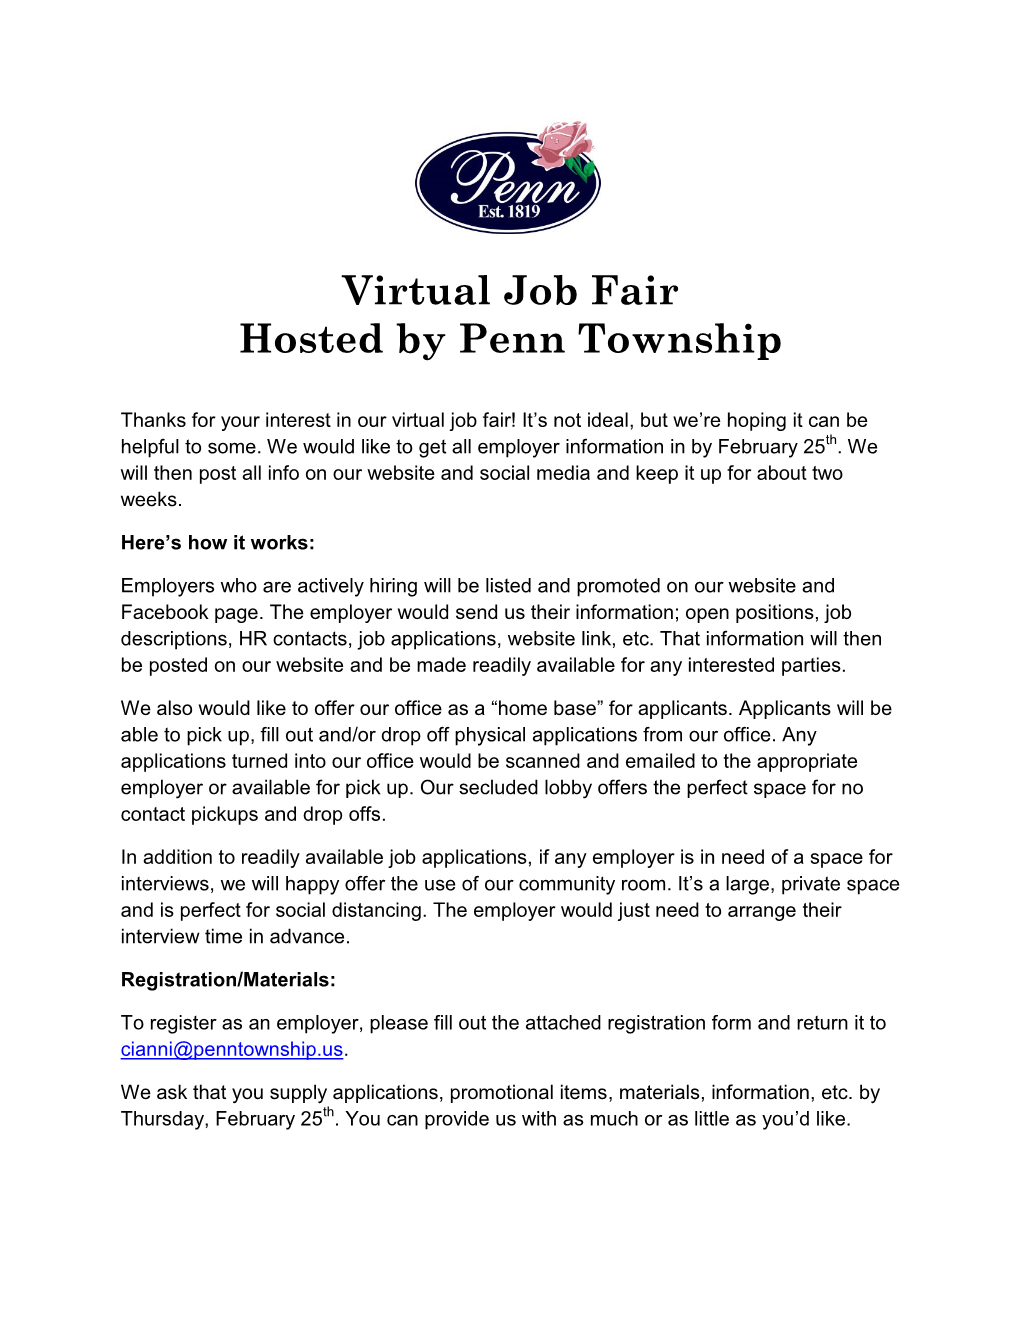 Virtual Job Fair Hosted by Penn Township